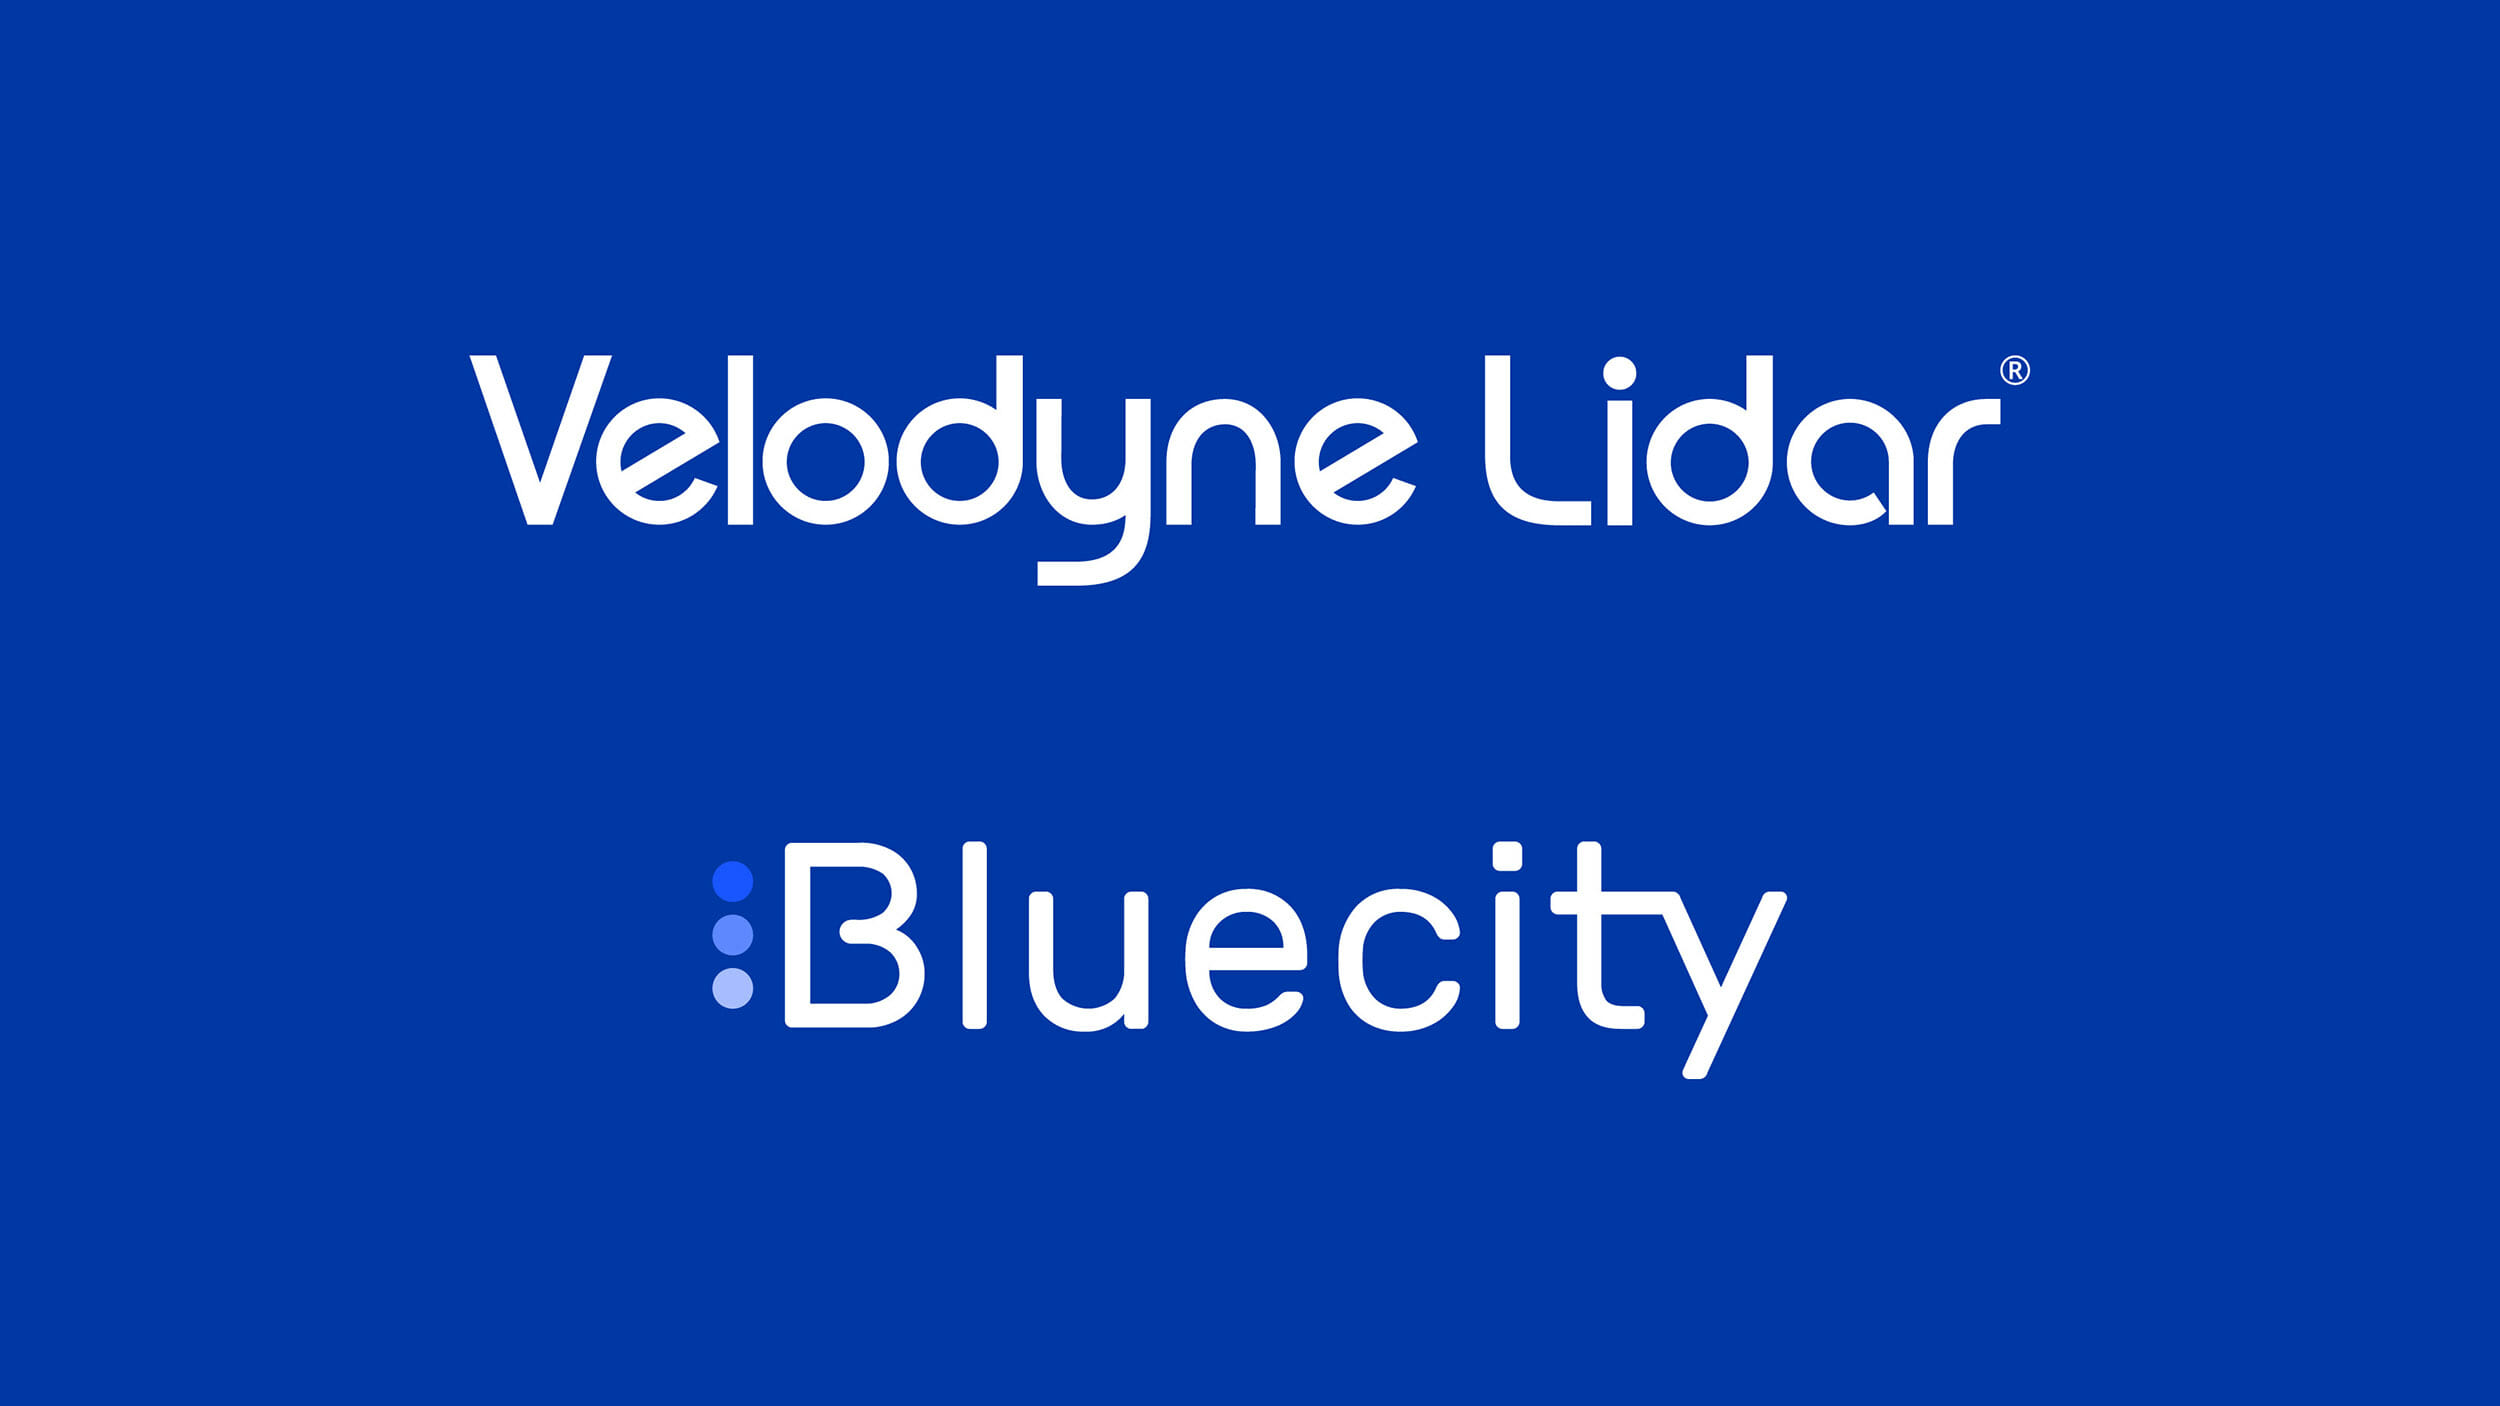 https://velodynelidar.com/wp-content/uploads/2022/10/Velodyne-Lidar-Acquires-Bluecity-Logos.jpg